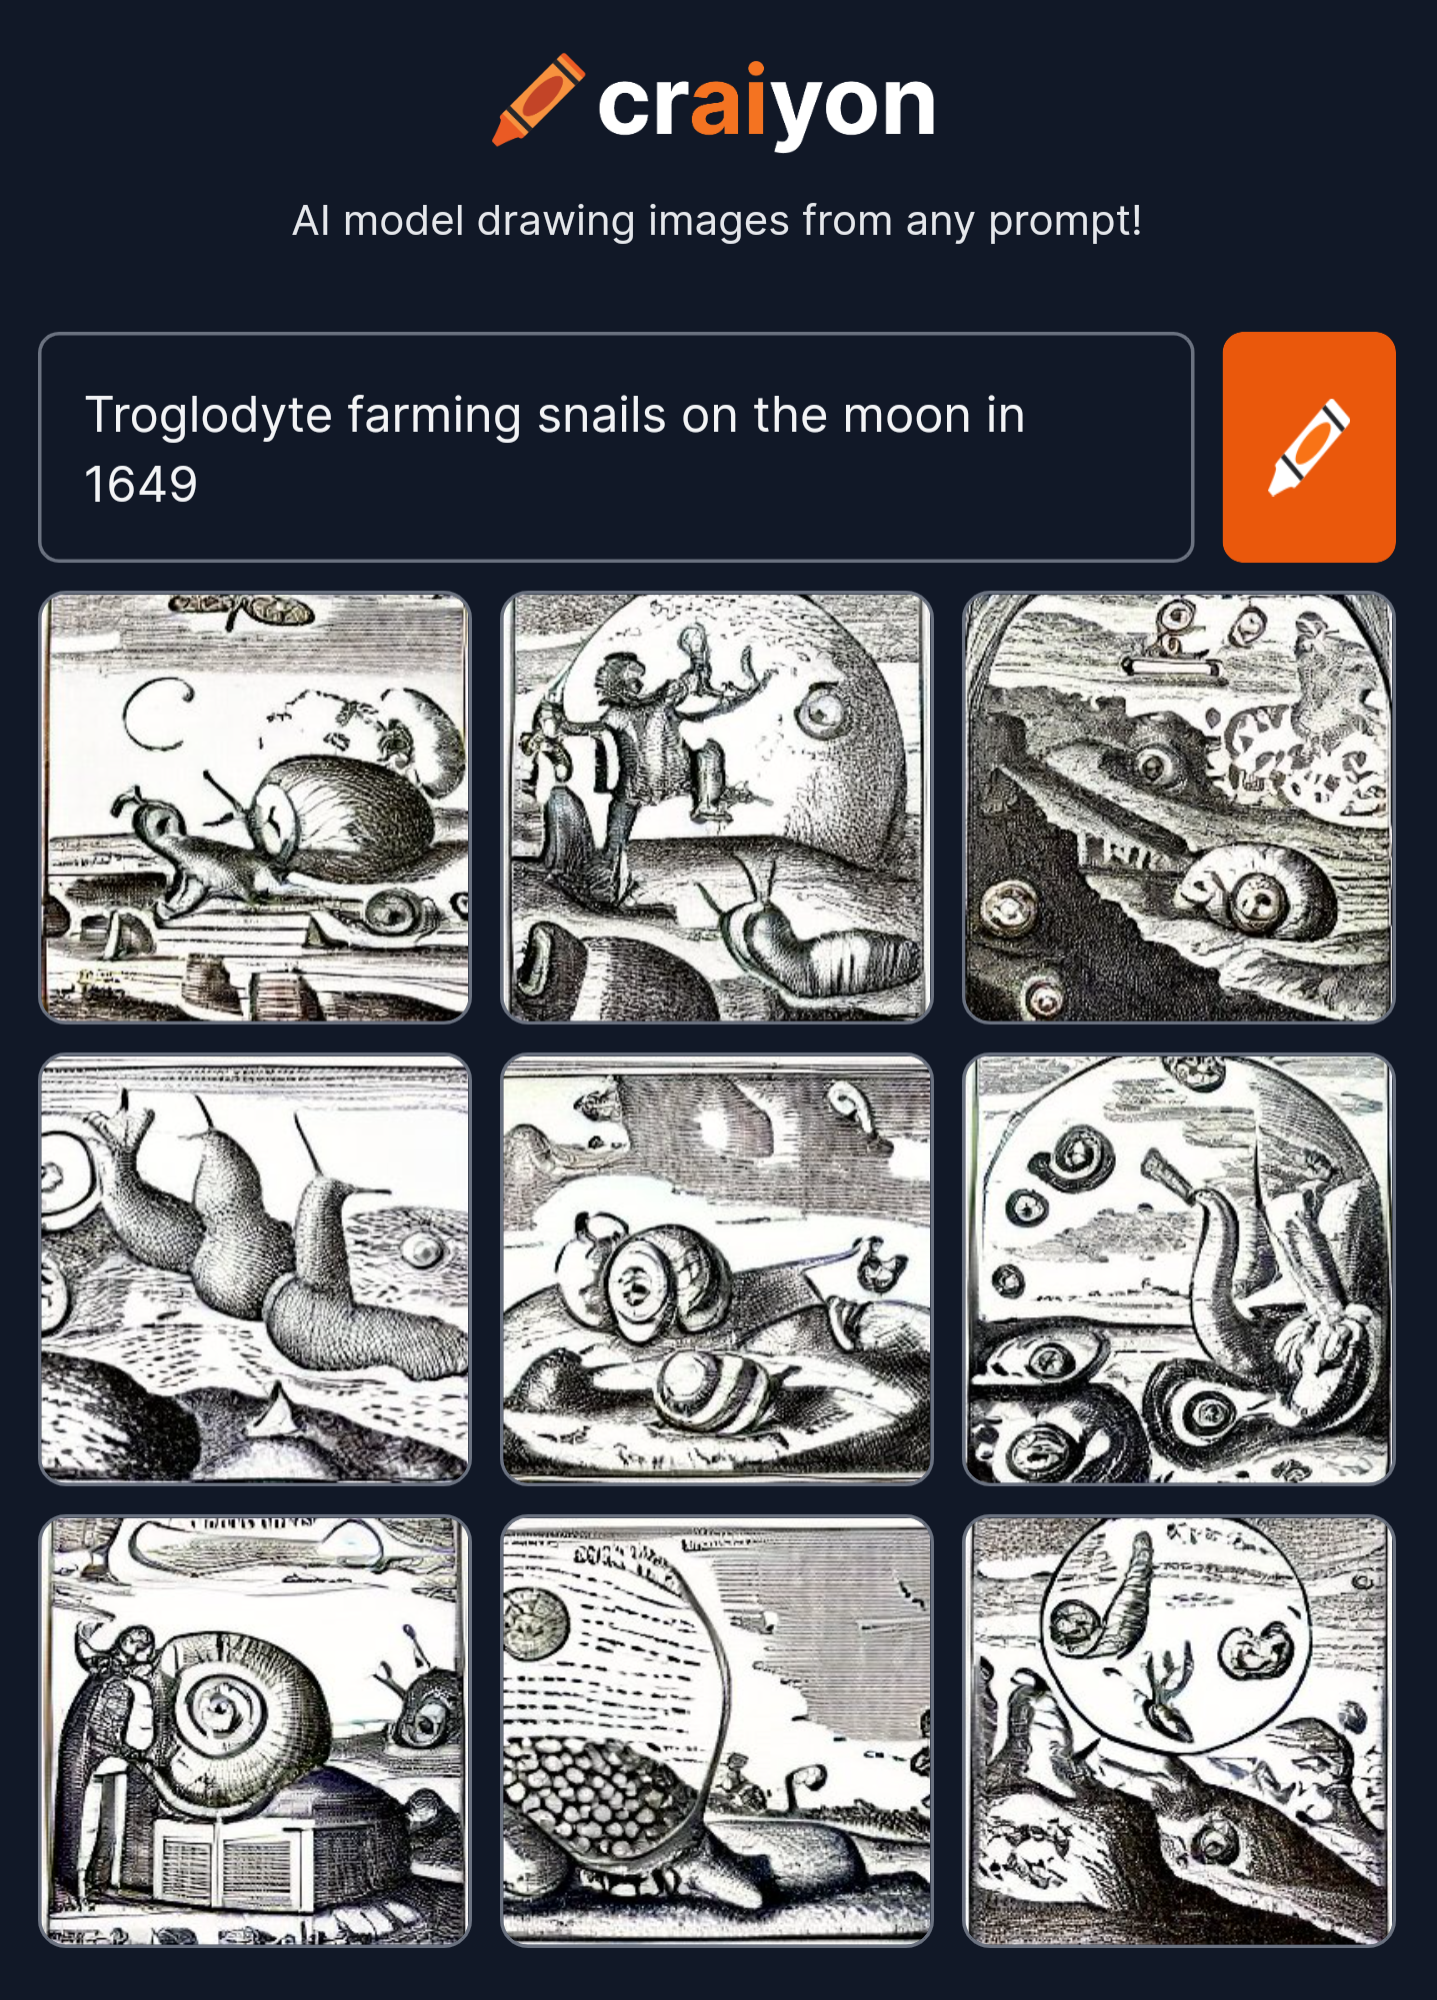 craiyon_200613_Troglodyte_farming_snails_on_the_moon_in_1649.jpg.png